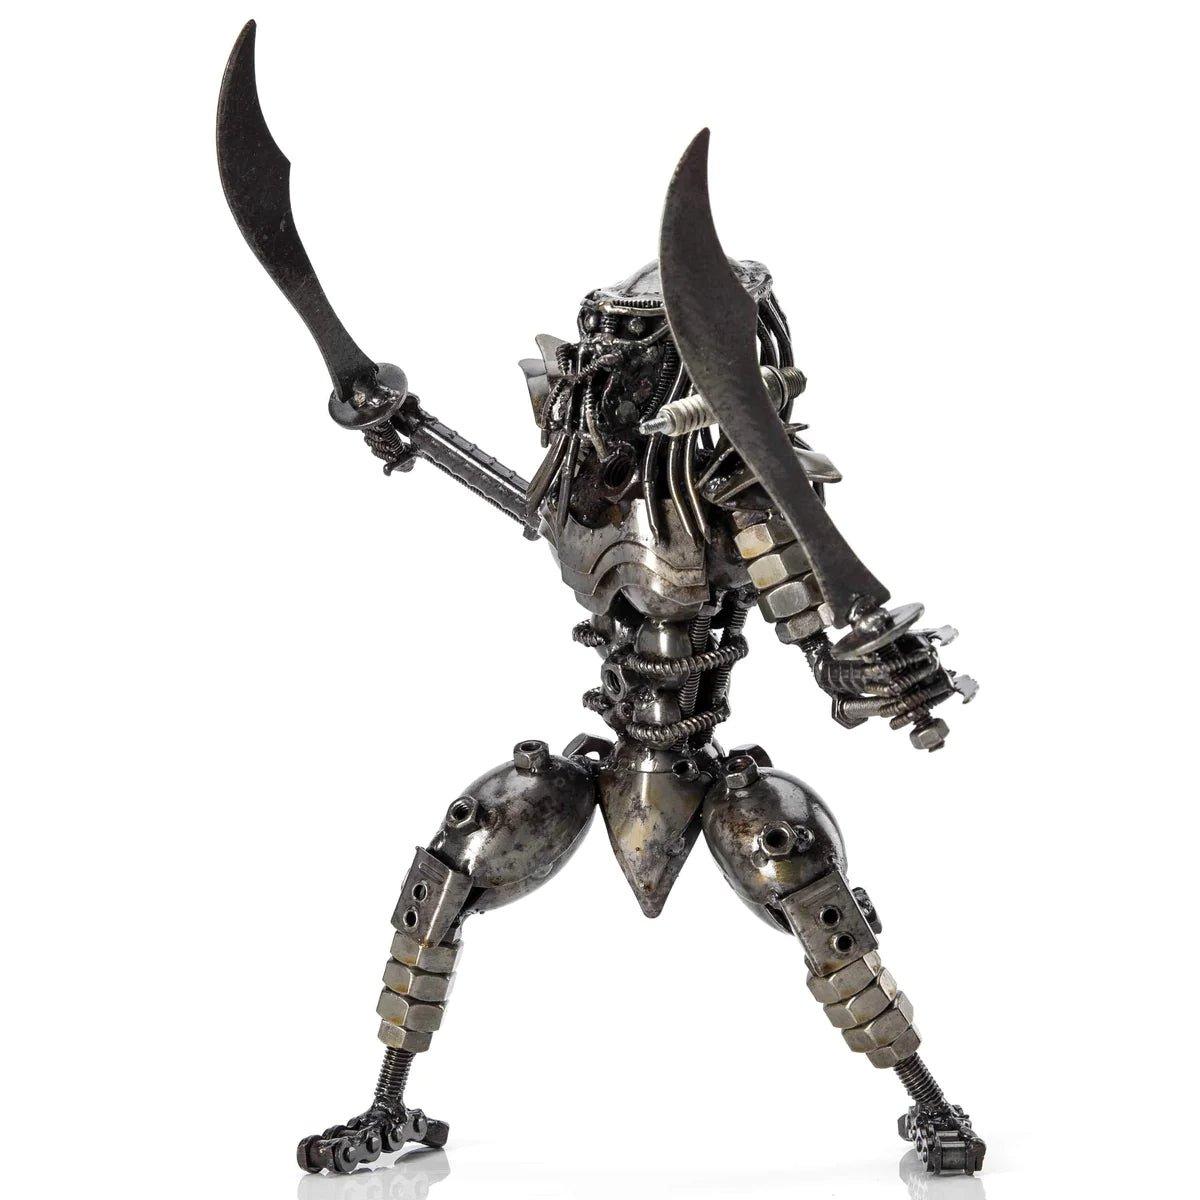 Predator with Dual Wielded Sword Inspired Recycled Metal Sculpture - Xformerz